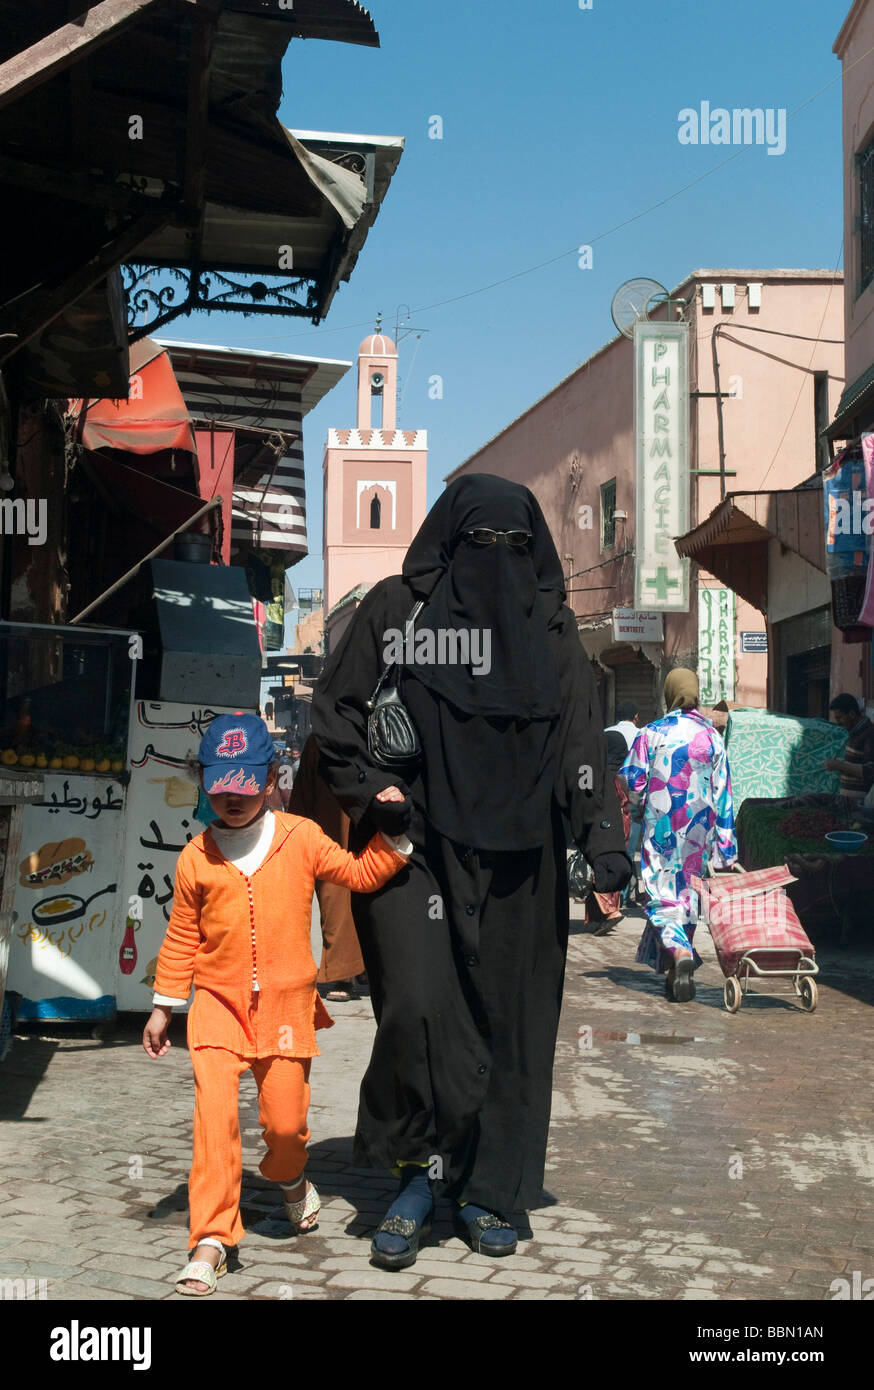 Veiled women, street scene in the old city, the Medina, Marrakech, Morocco, Africa Stock Photo